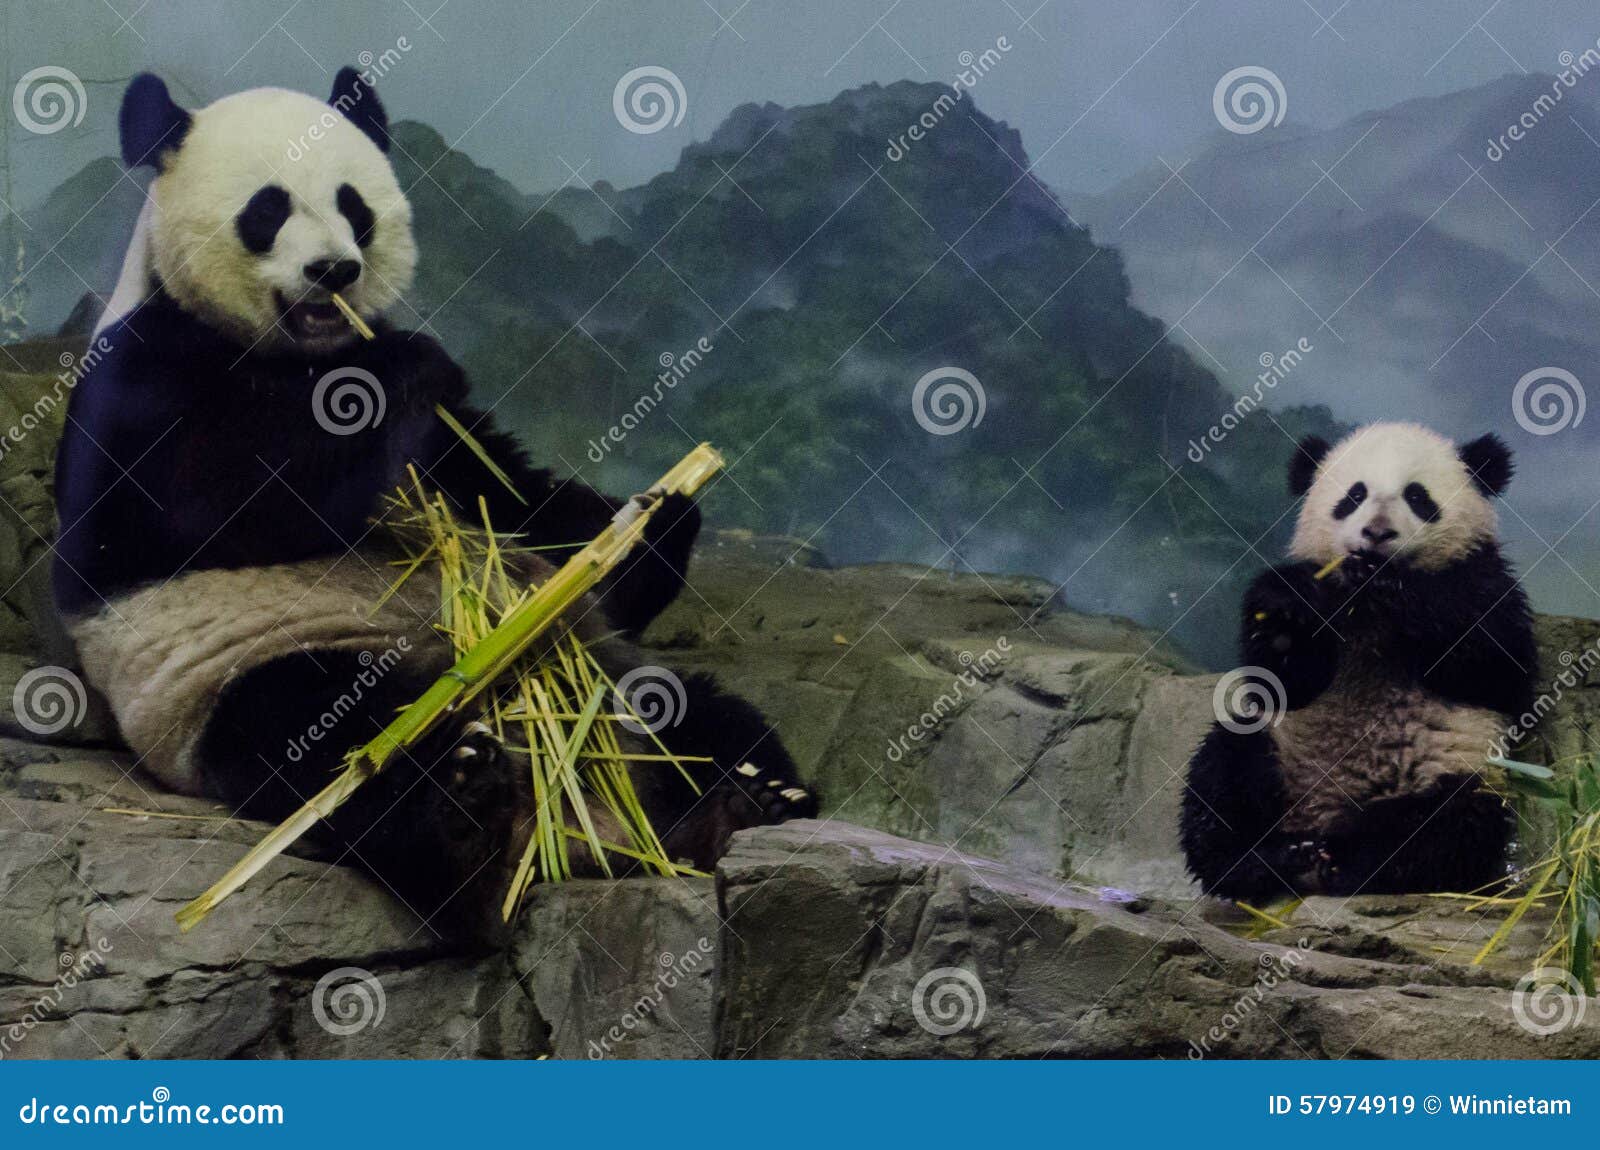 giant panda and cub eat bamboo